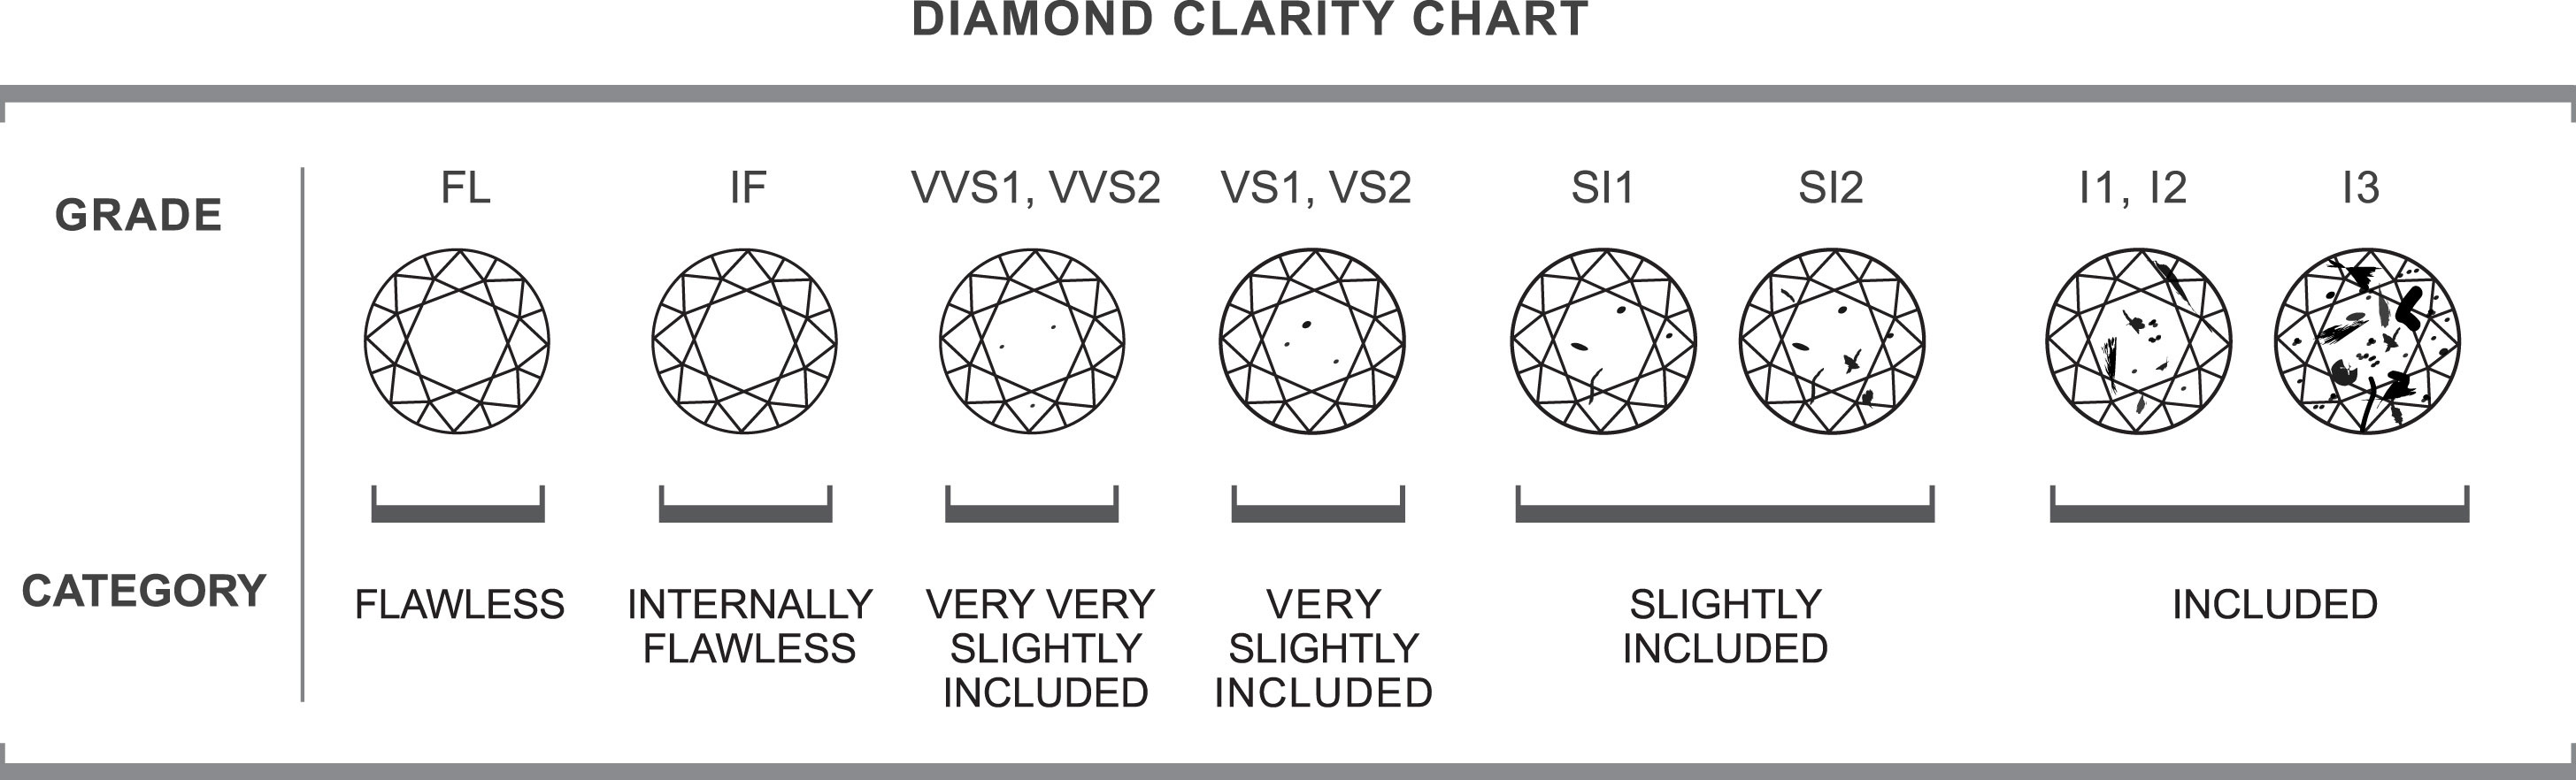 4 C S Diamond Chart